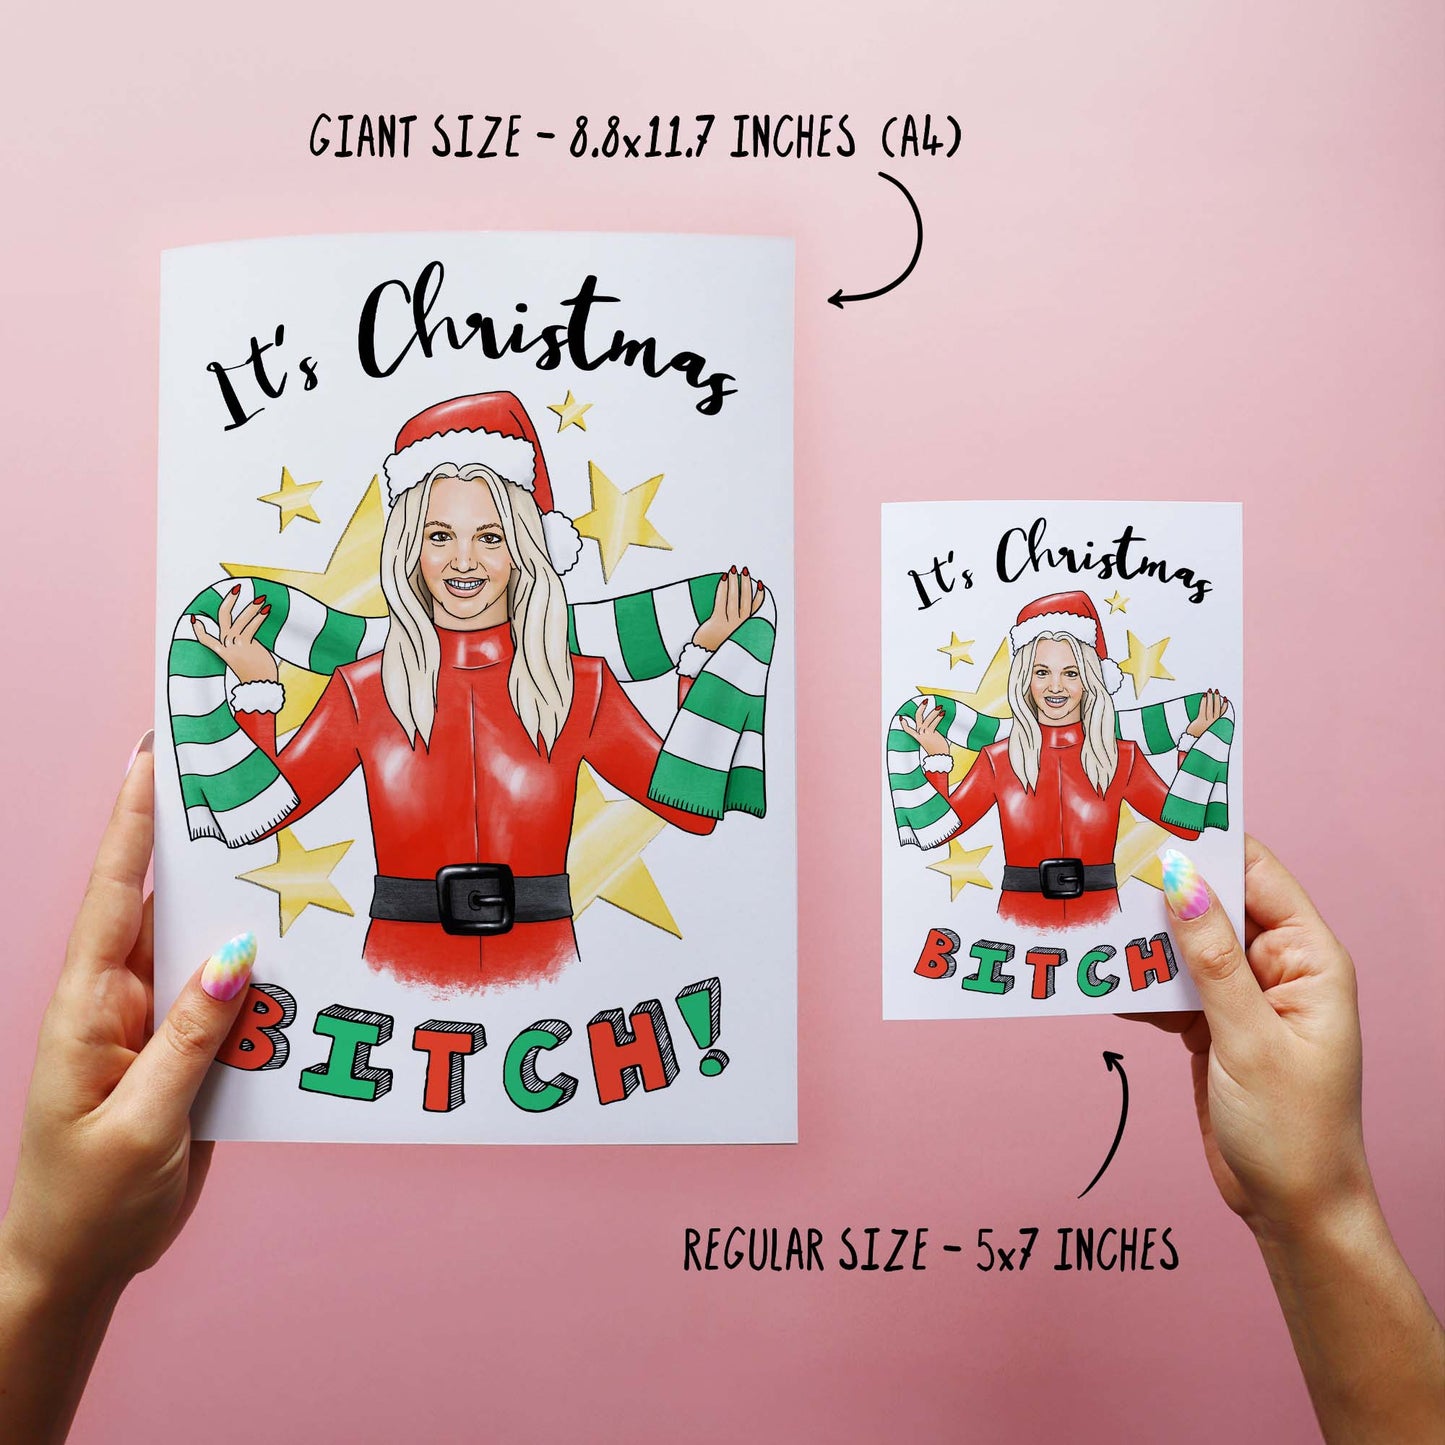 It's Christmas B*tch! - Funny Xmas Greeting Card